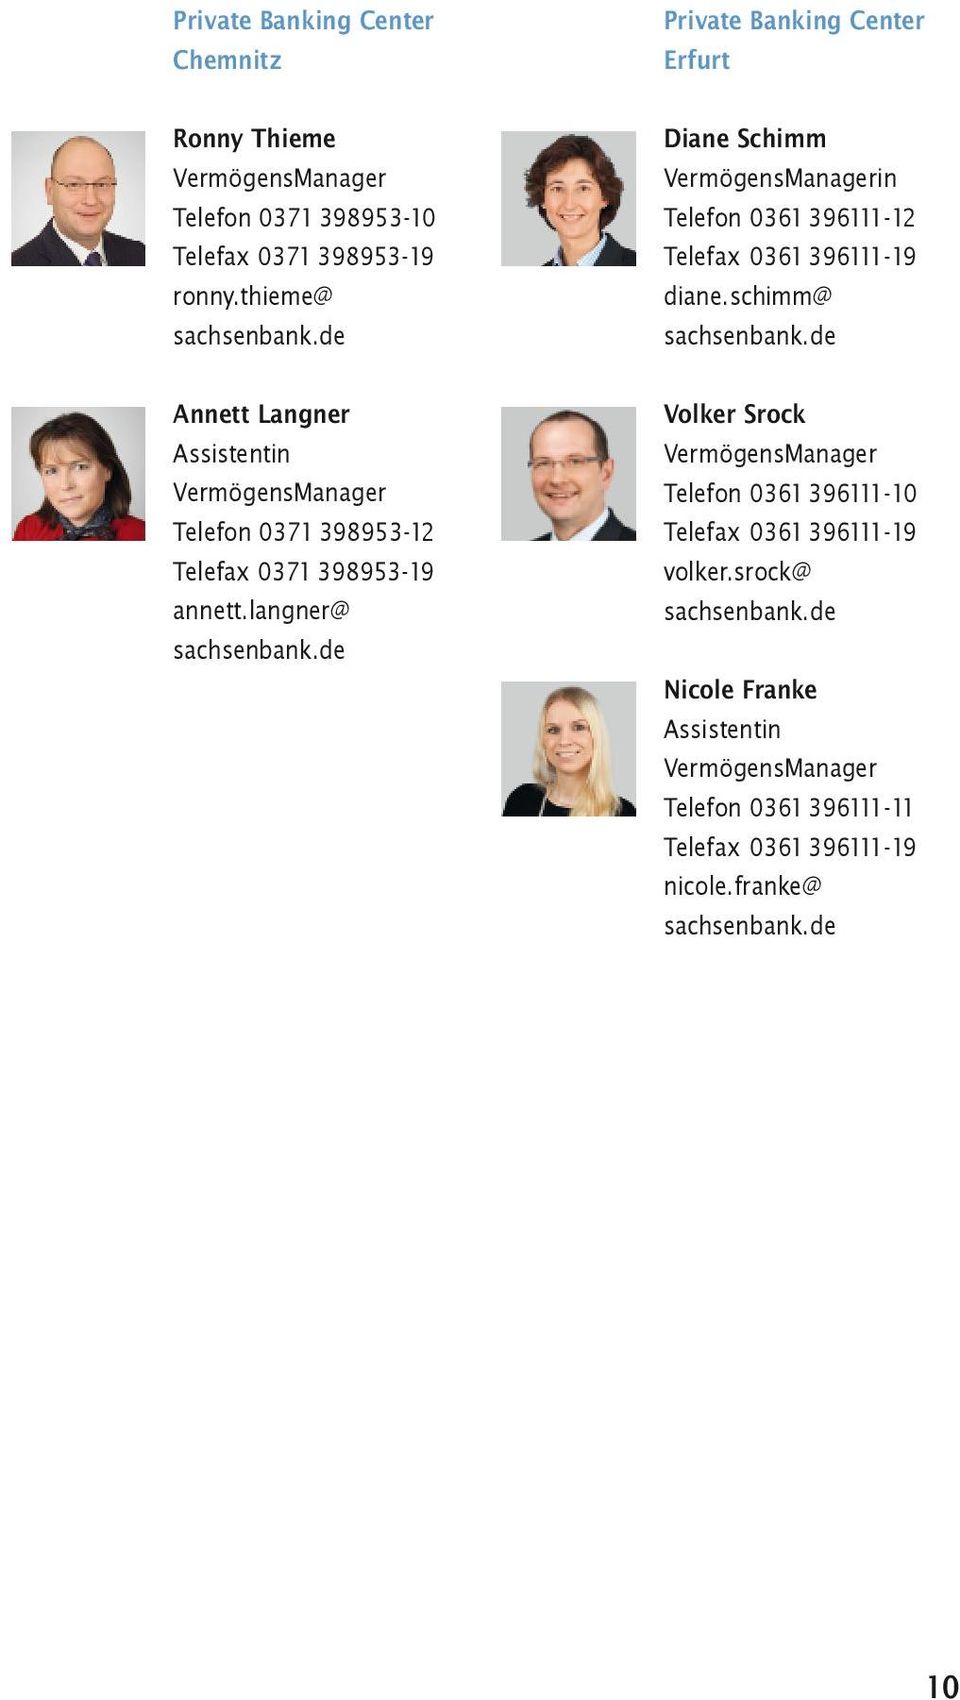 langner@ Private Banking Center Erfurt Diane Schimm in Telefon 0361 396111-12 Telefax 0361 396111-19 diane.